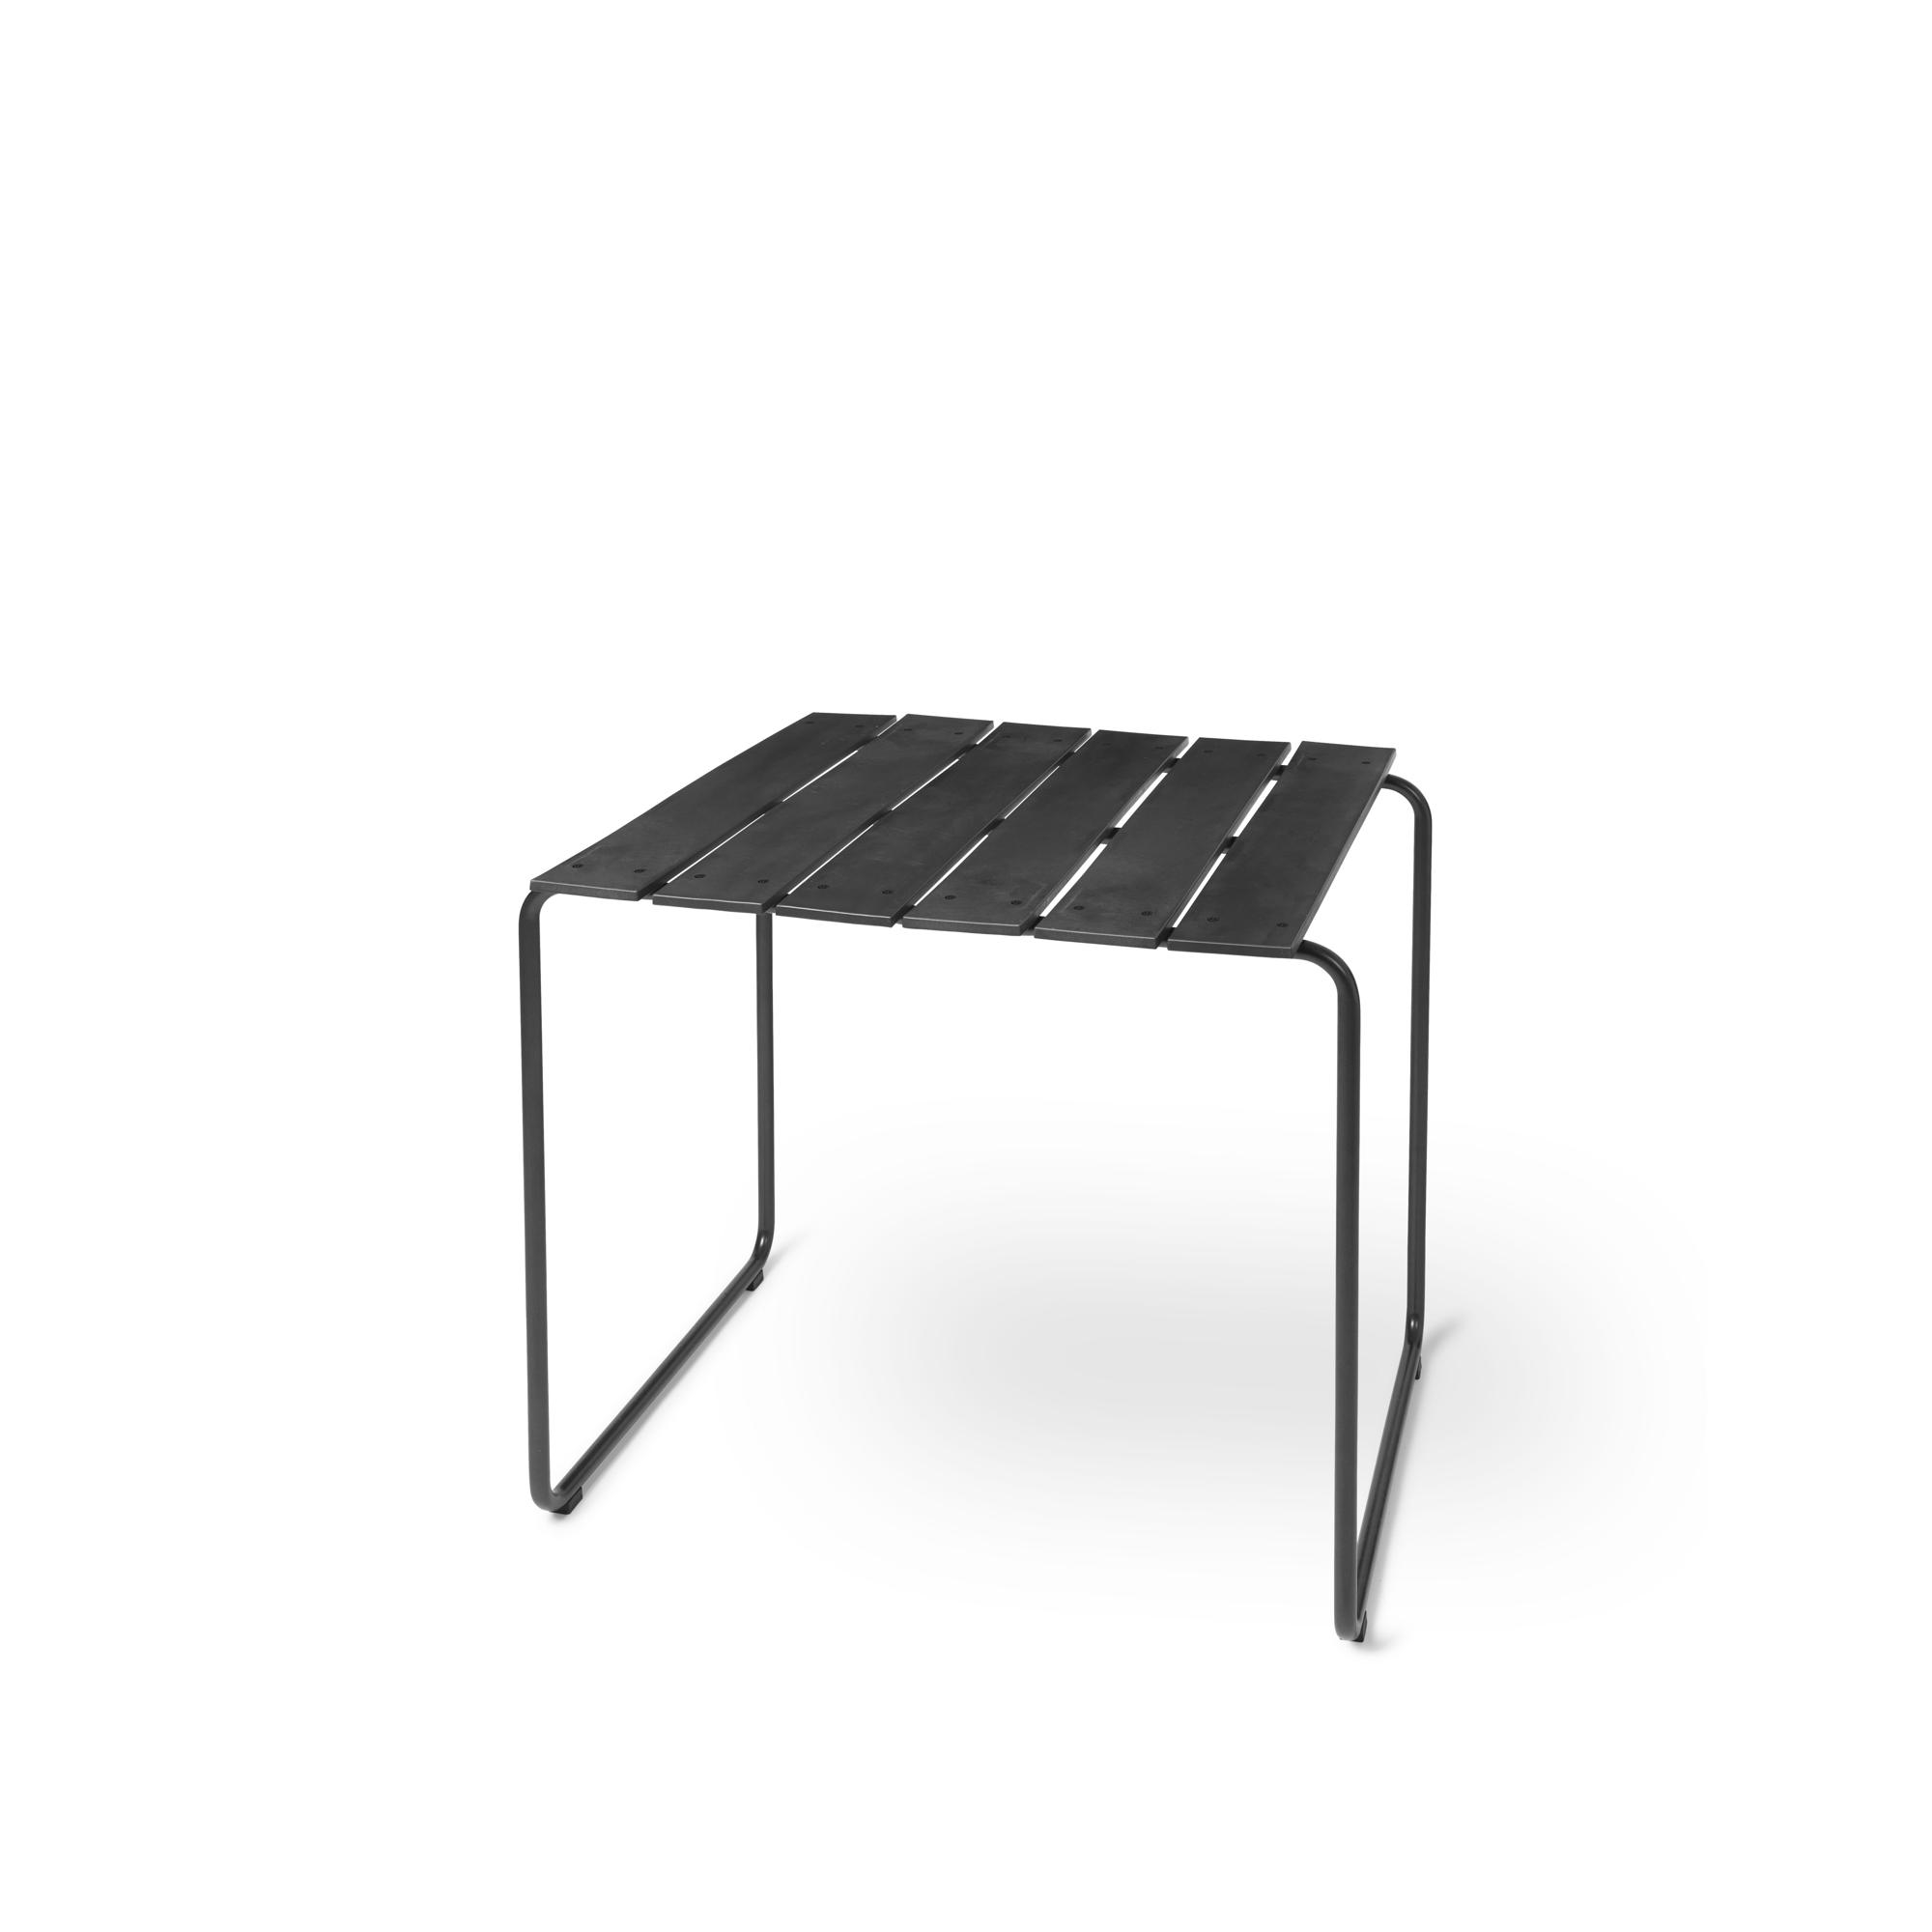 Mater Ocean Table Black 70x70 cm